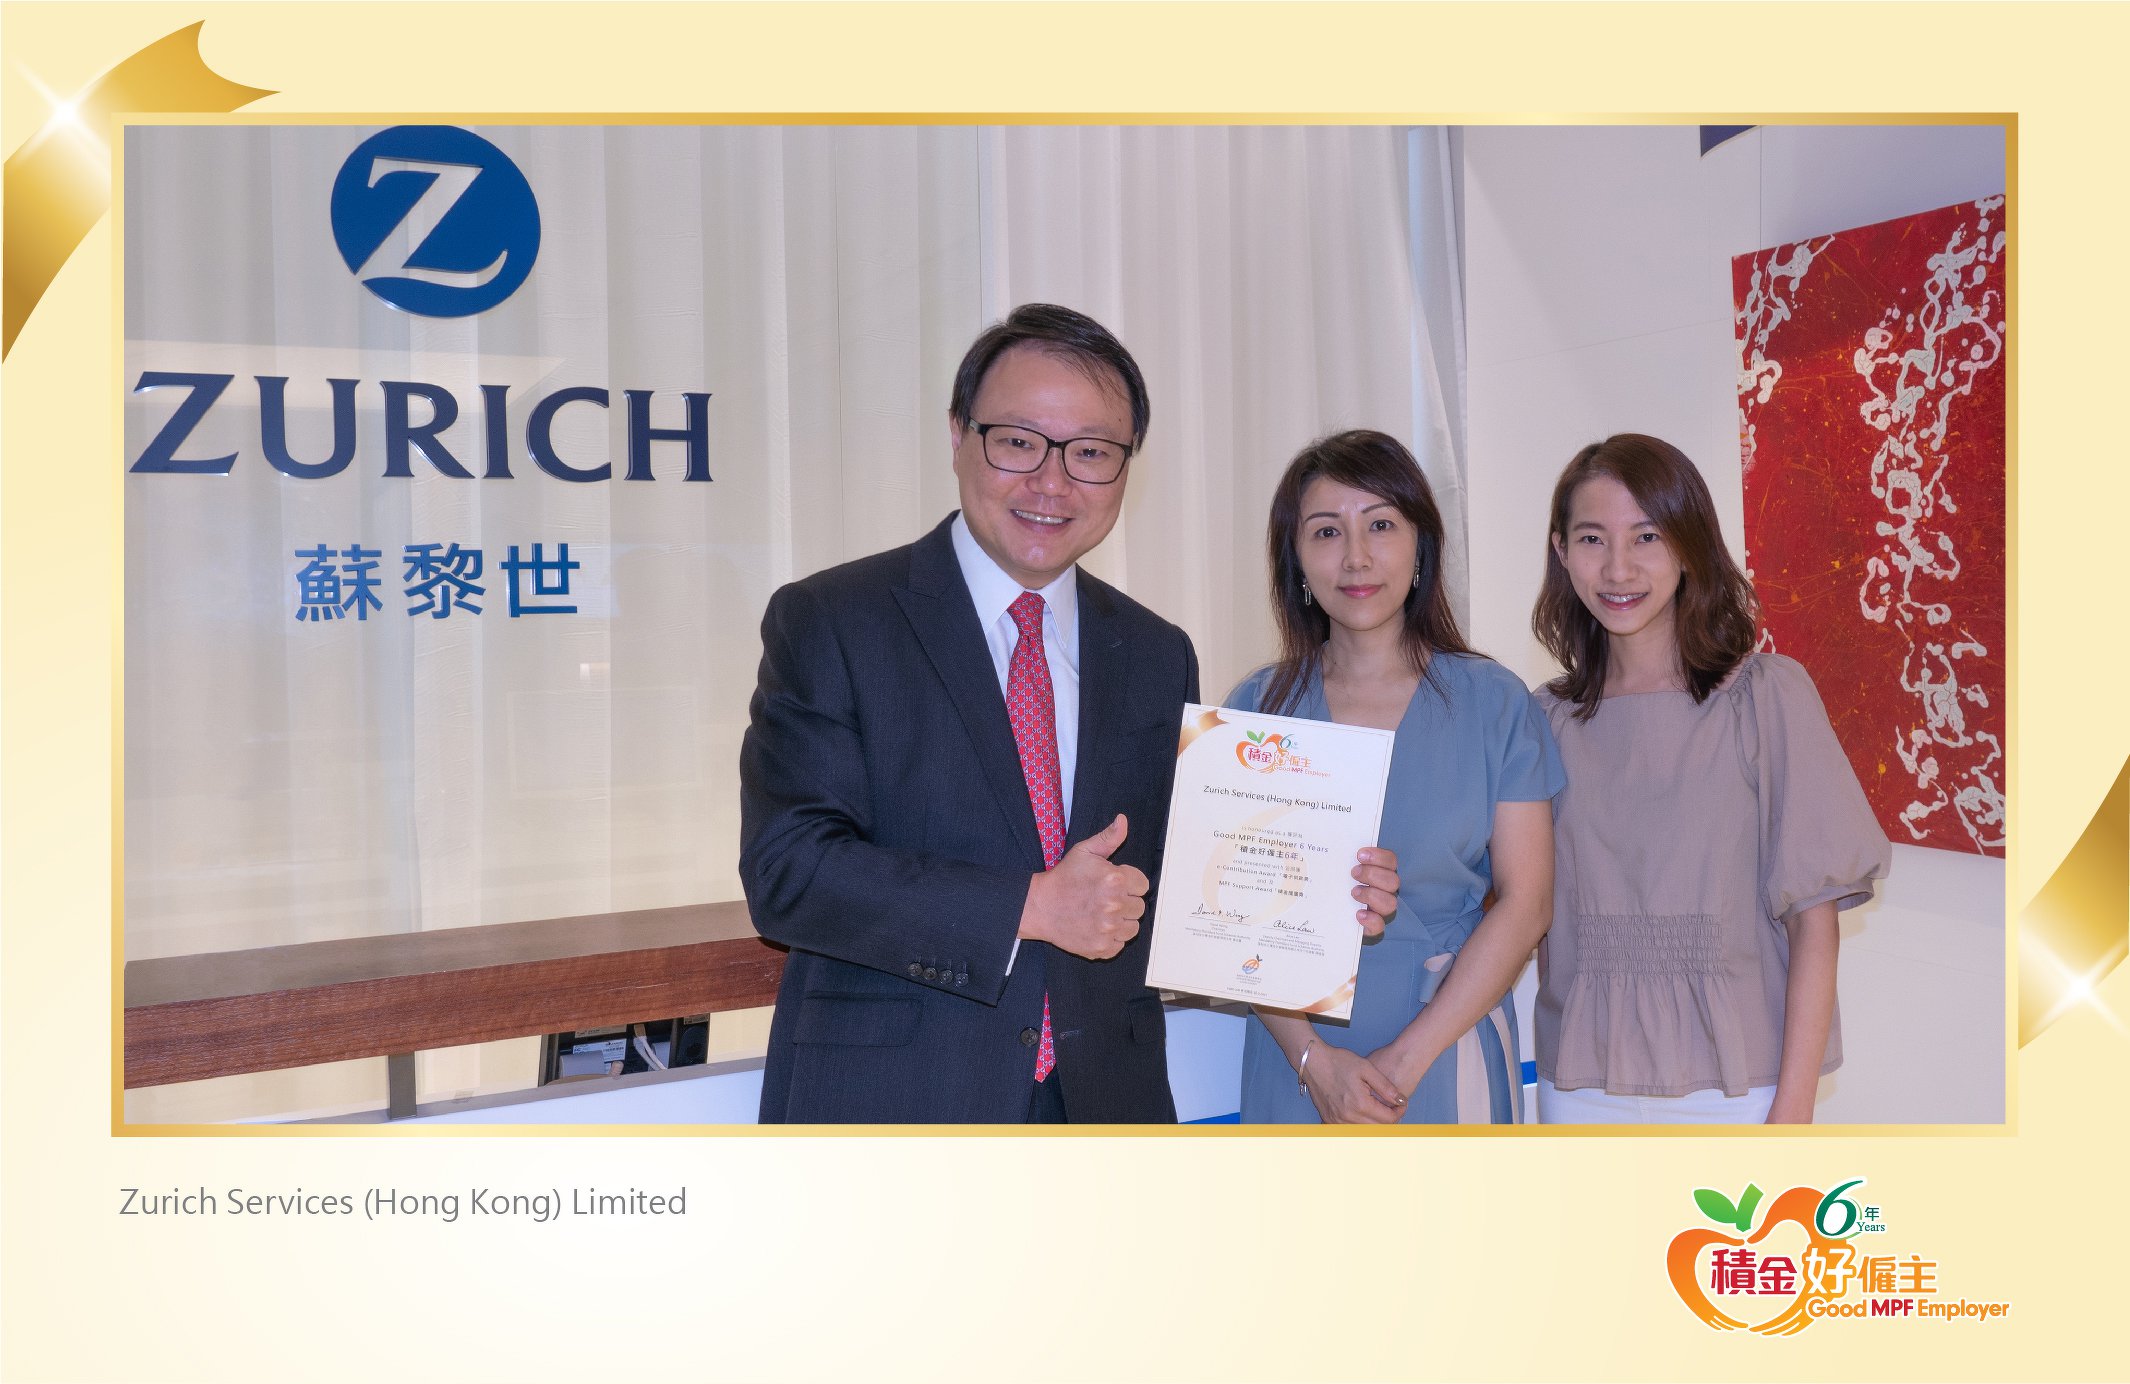 Zurich Services (Hong Kong) Limited